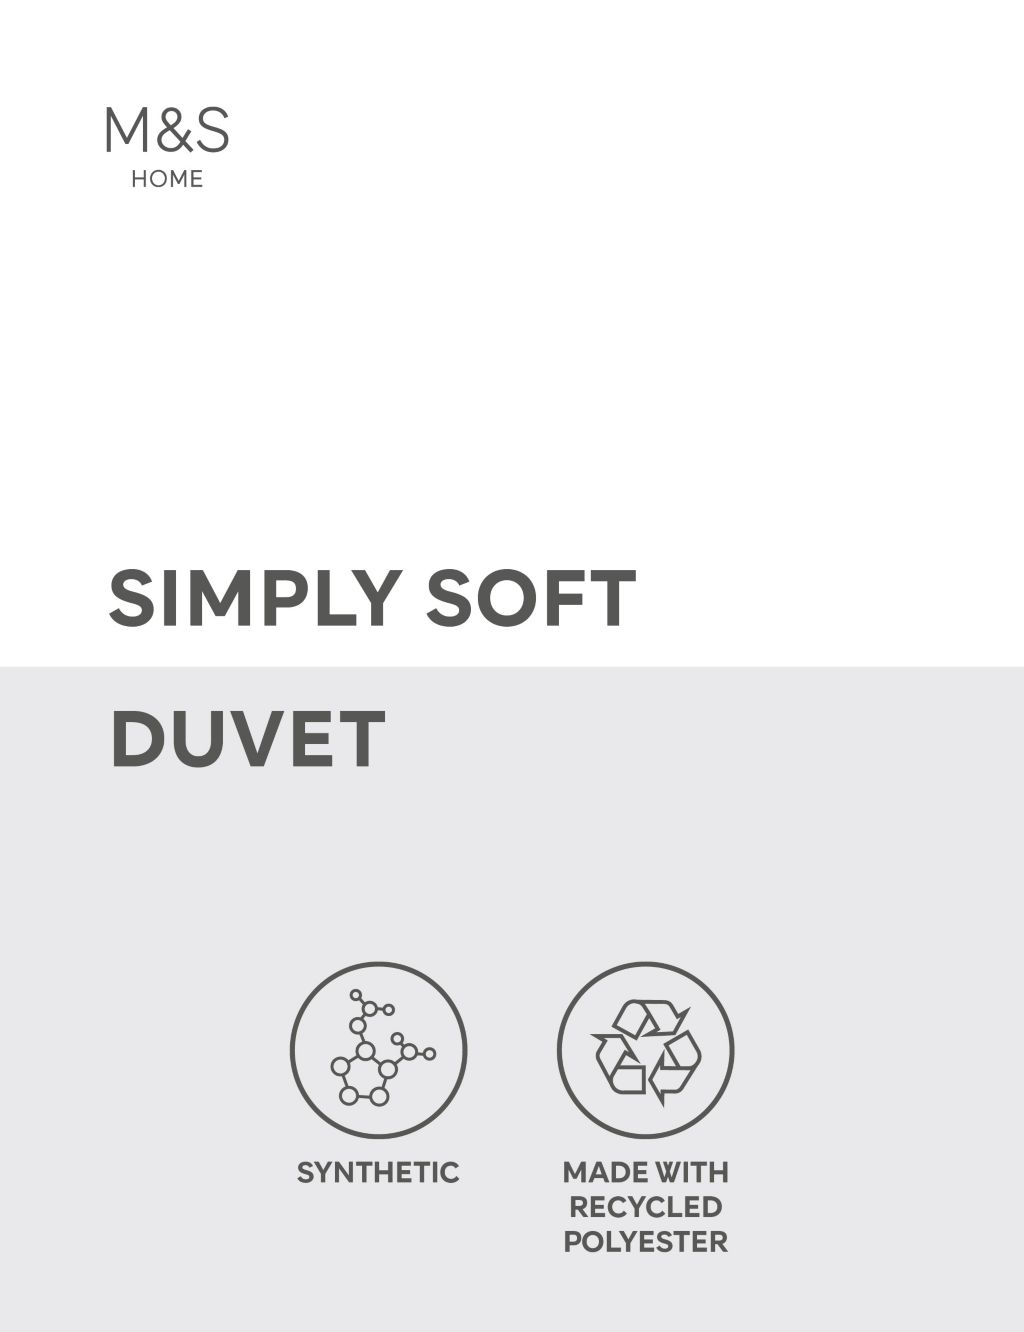 Simply Soft 4.5 Tog Duvet image 1